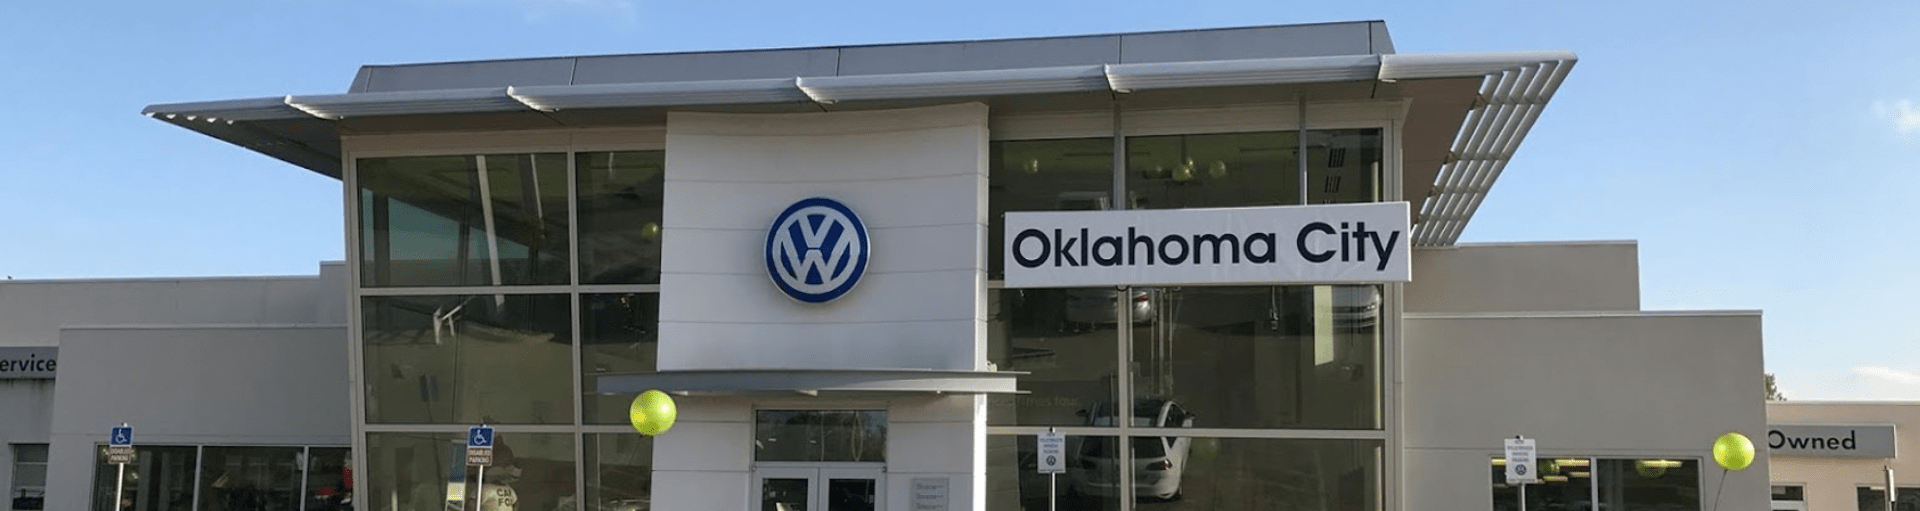 Oklahoma City Volkswagen Multi-Point Inspection Service